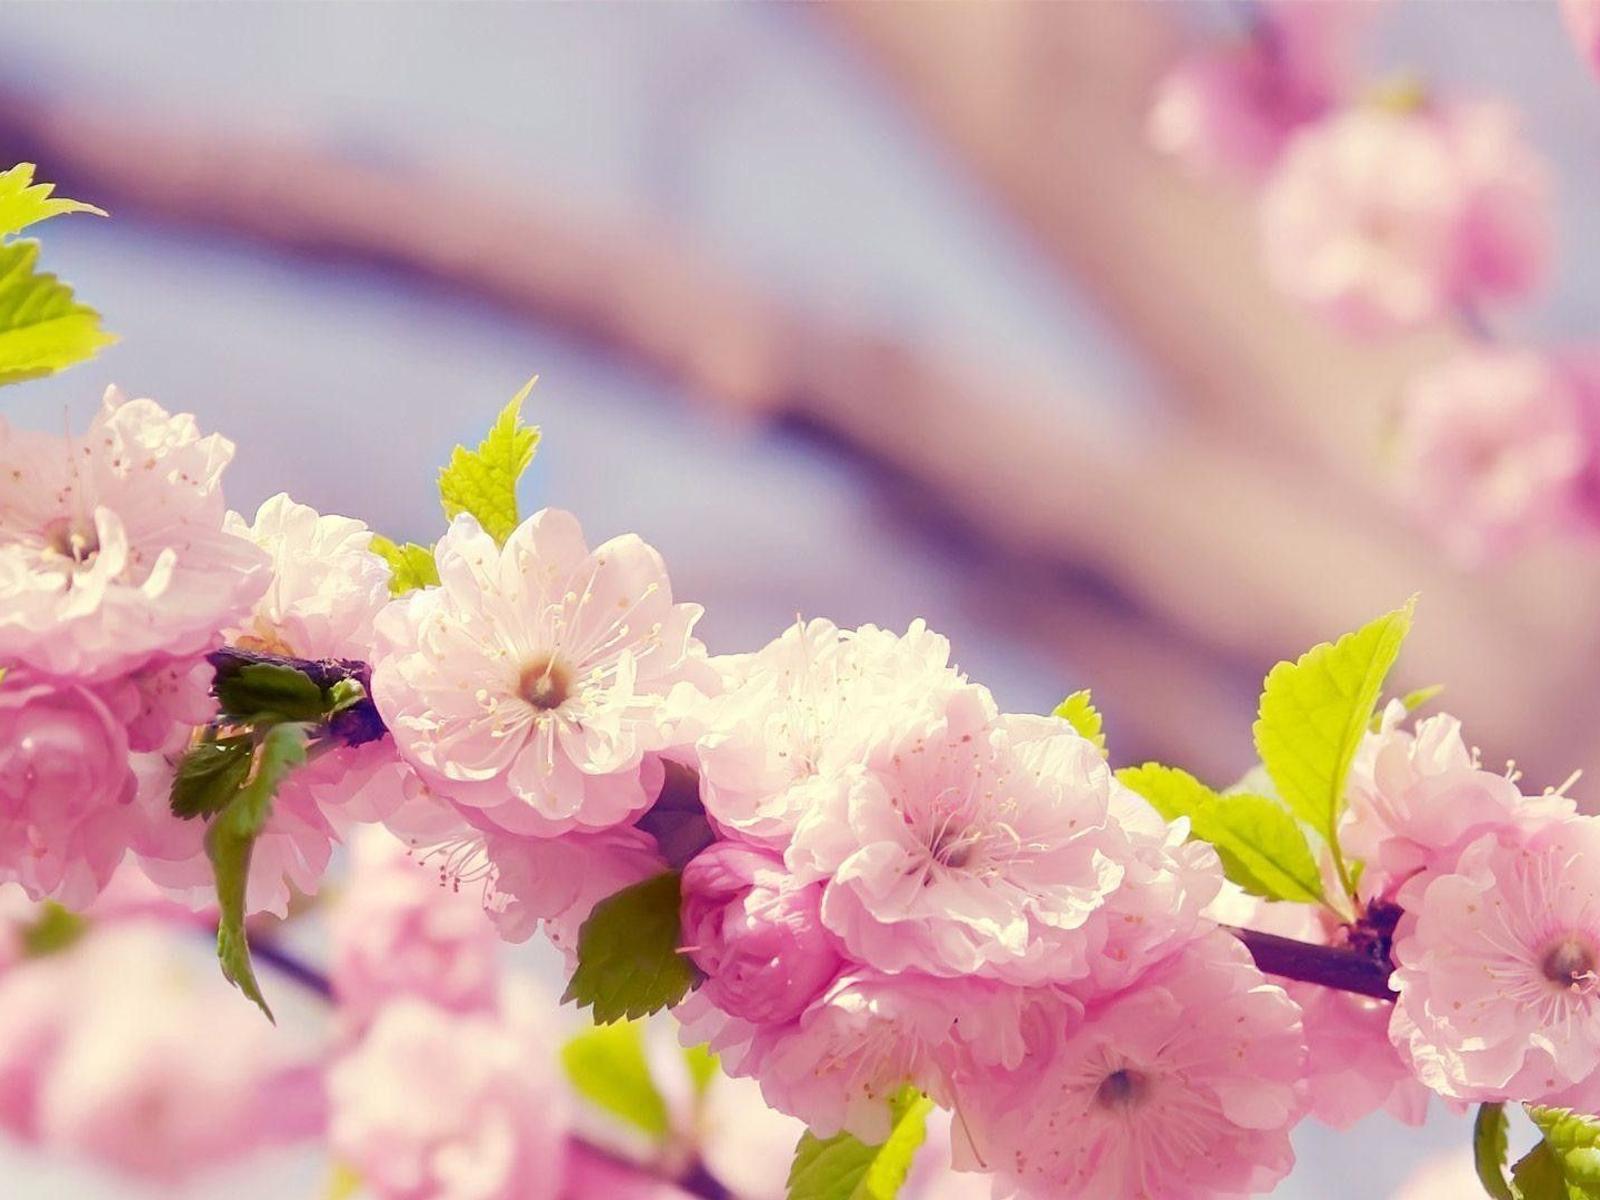 Blossom cherry flowers - HD spring season time wallpaper